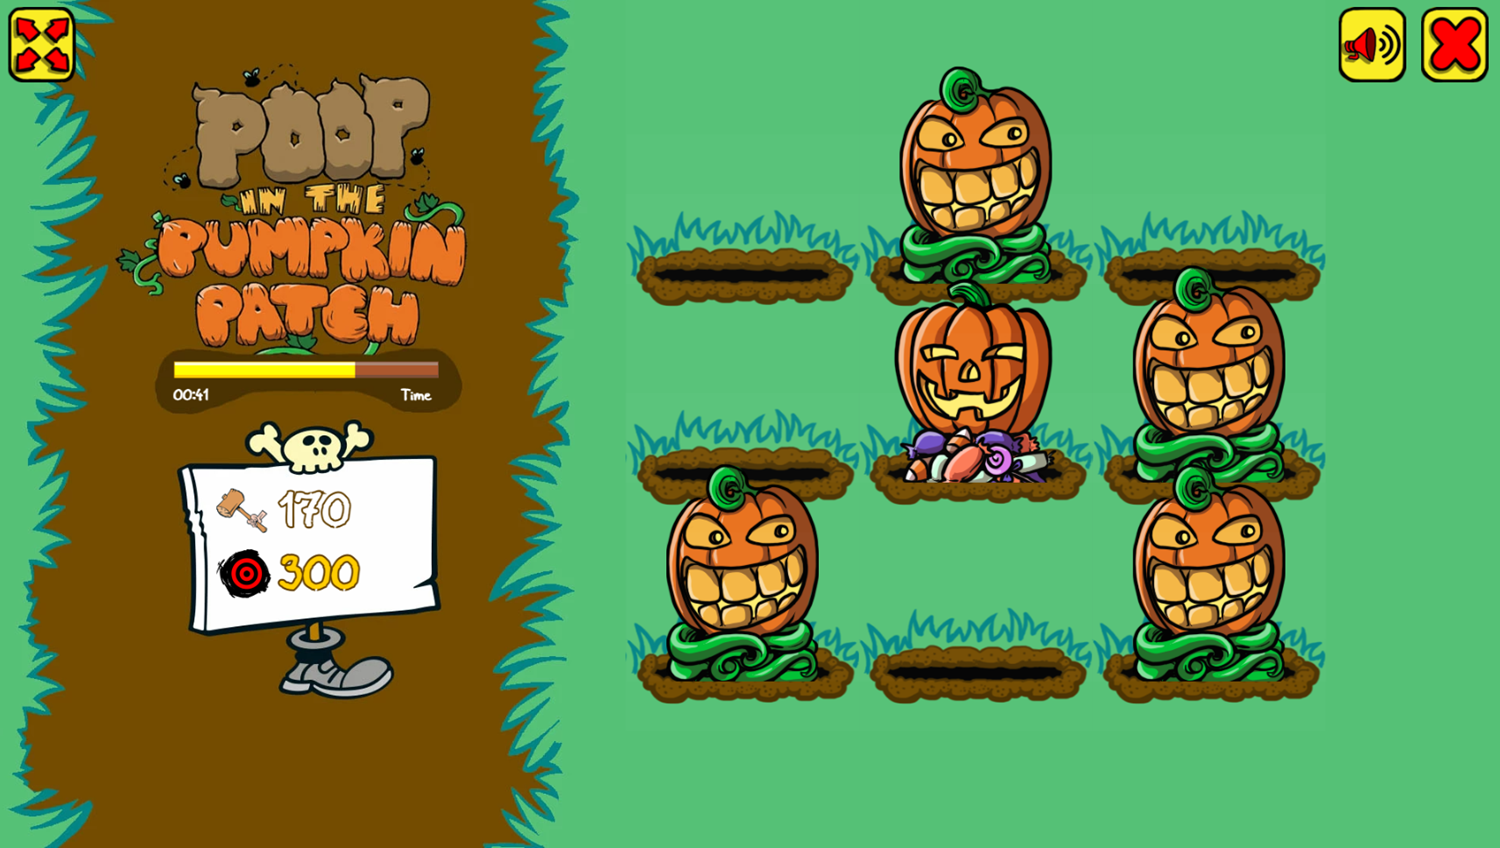 Poop in the Pumpkin Patch Game Play Screenshot.